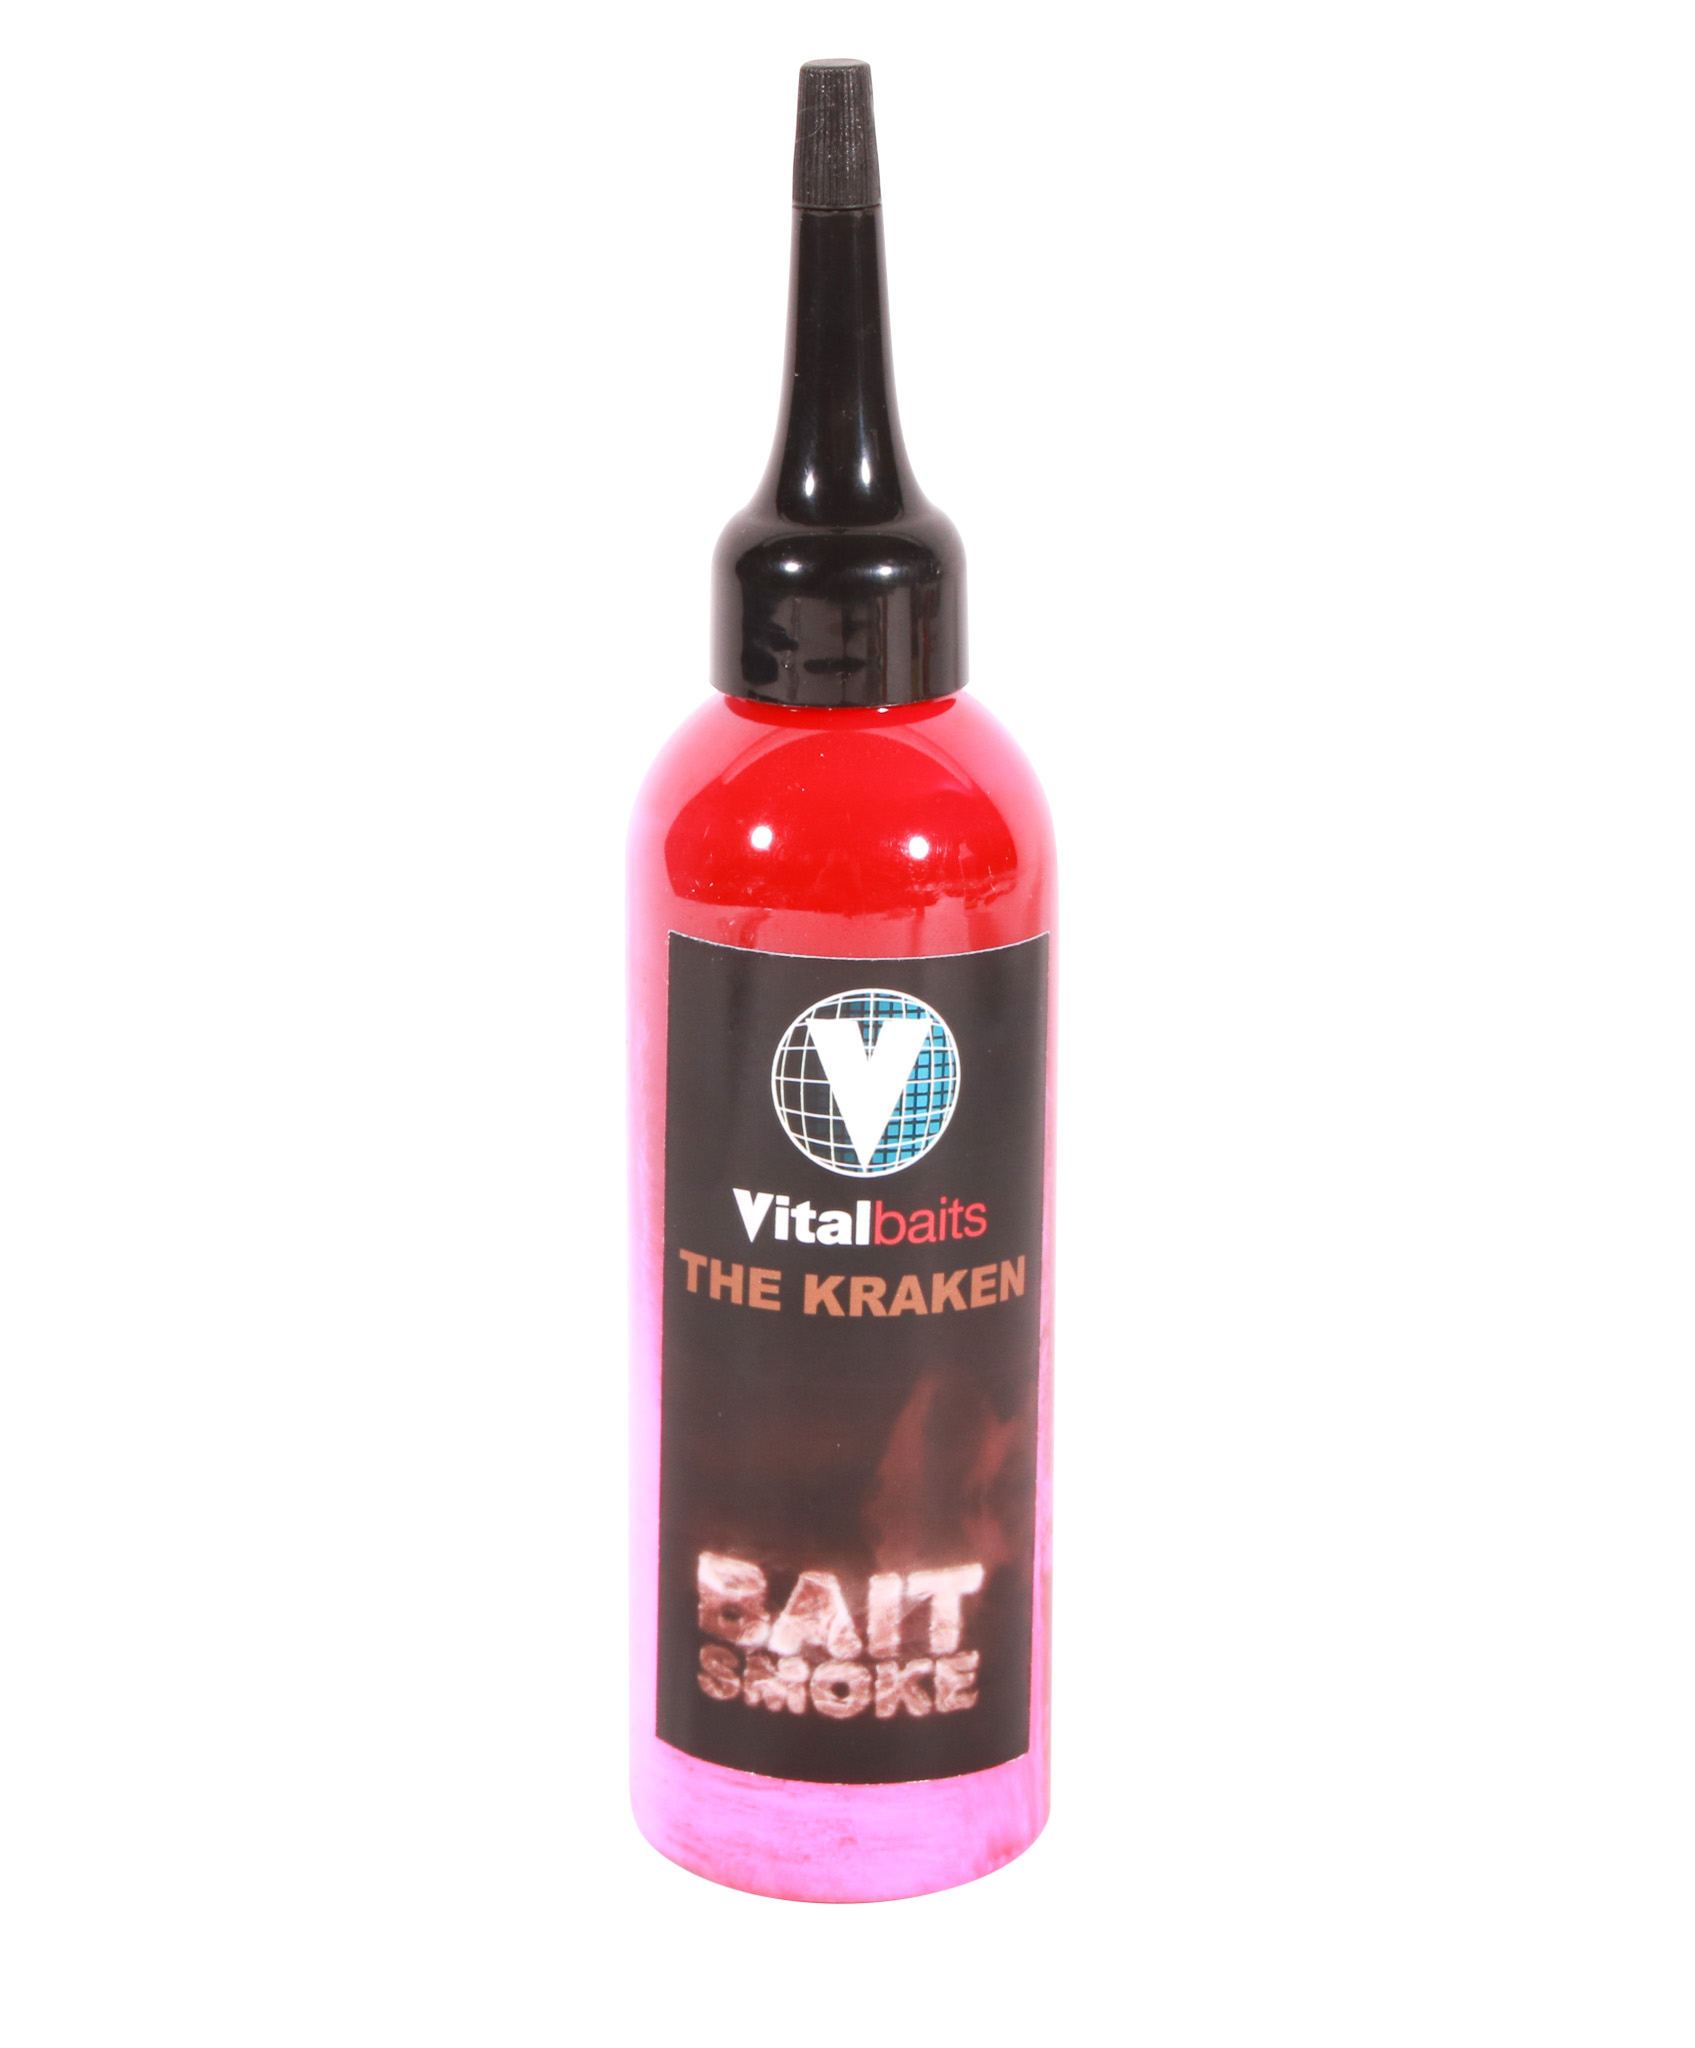 Vital Baits Bait Smoke Liquid (100ml)